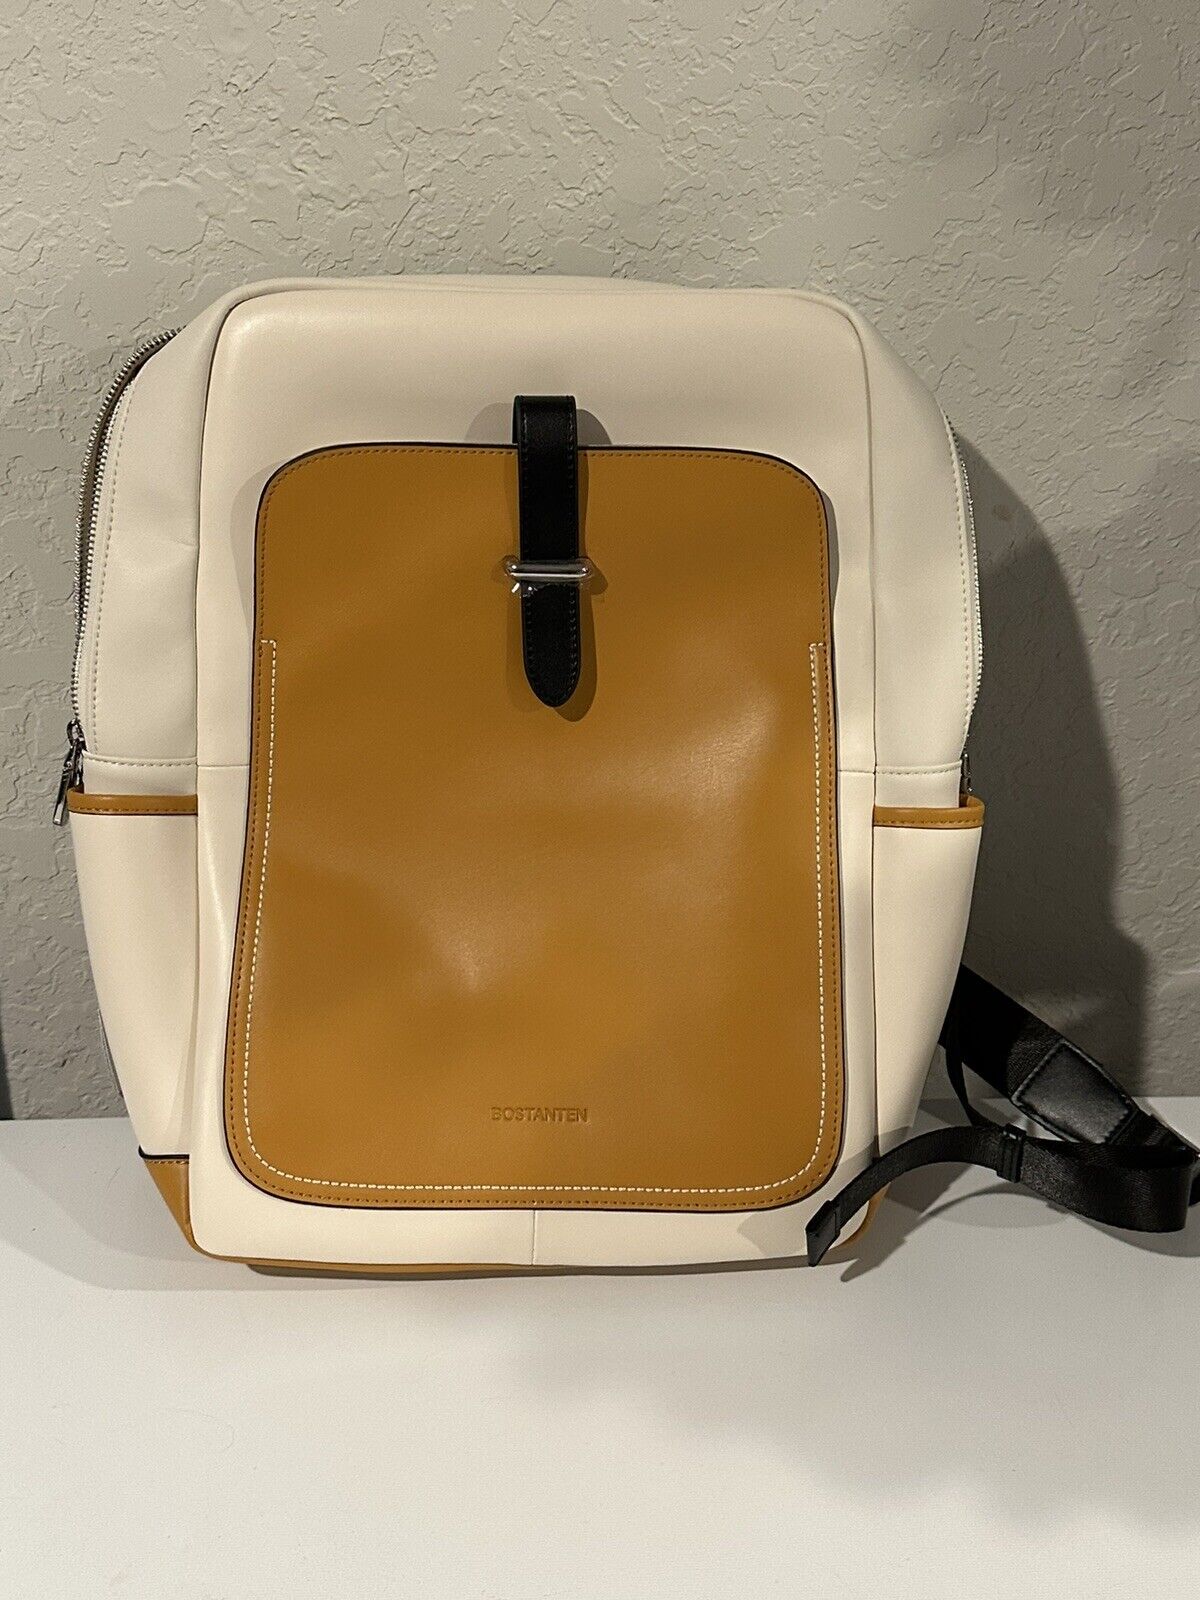 BOSTANTEN Leather Laptop Backpack for Women,15.6 inch Computer Beige 